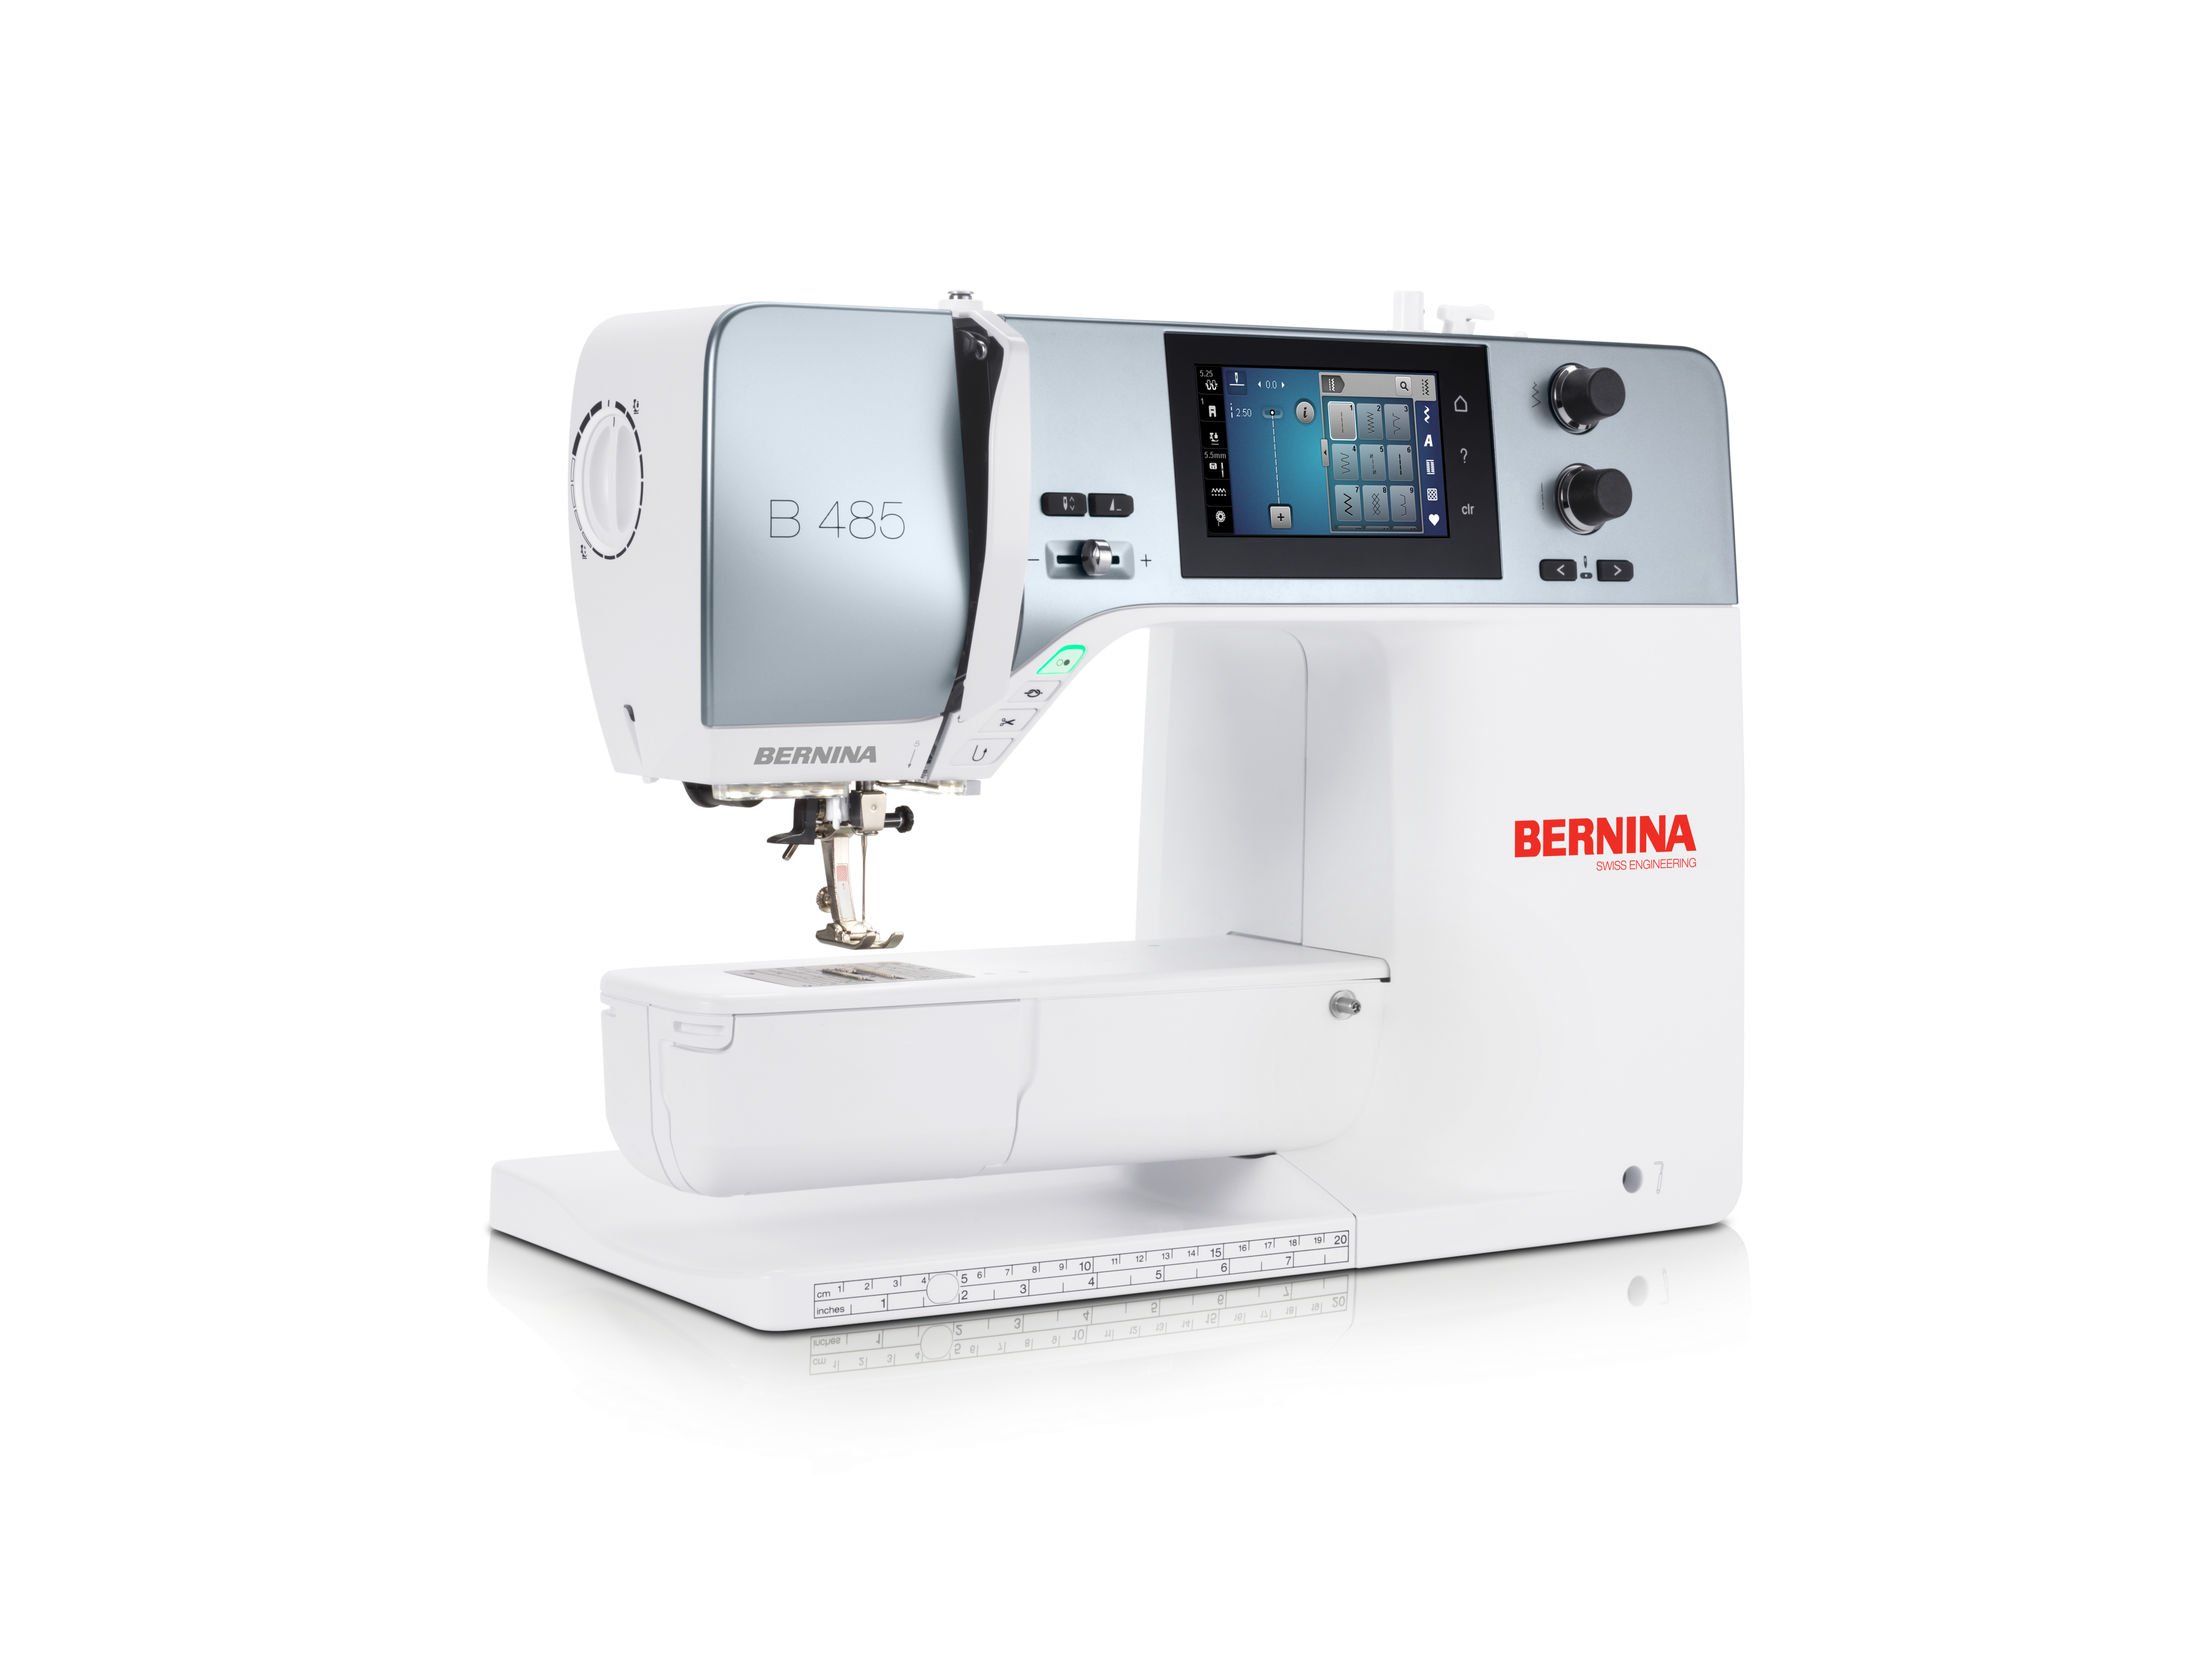 BERNINA 485 Sewing Machine